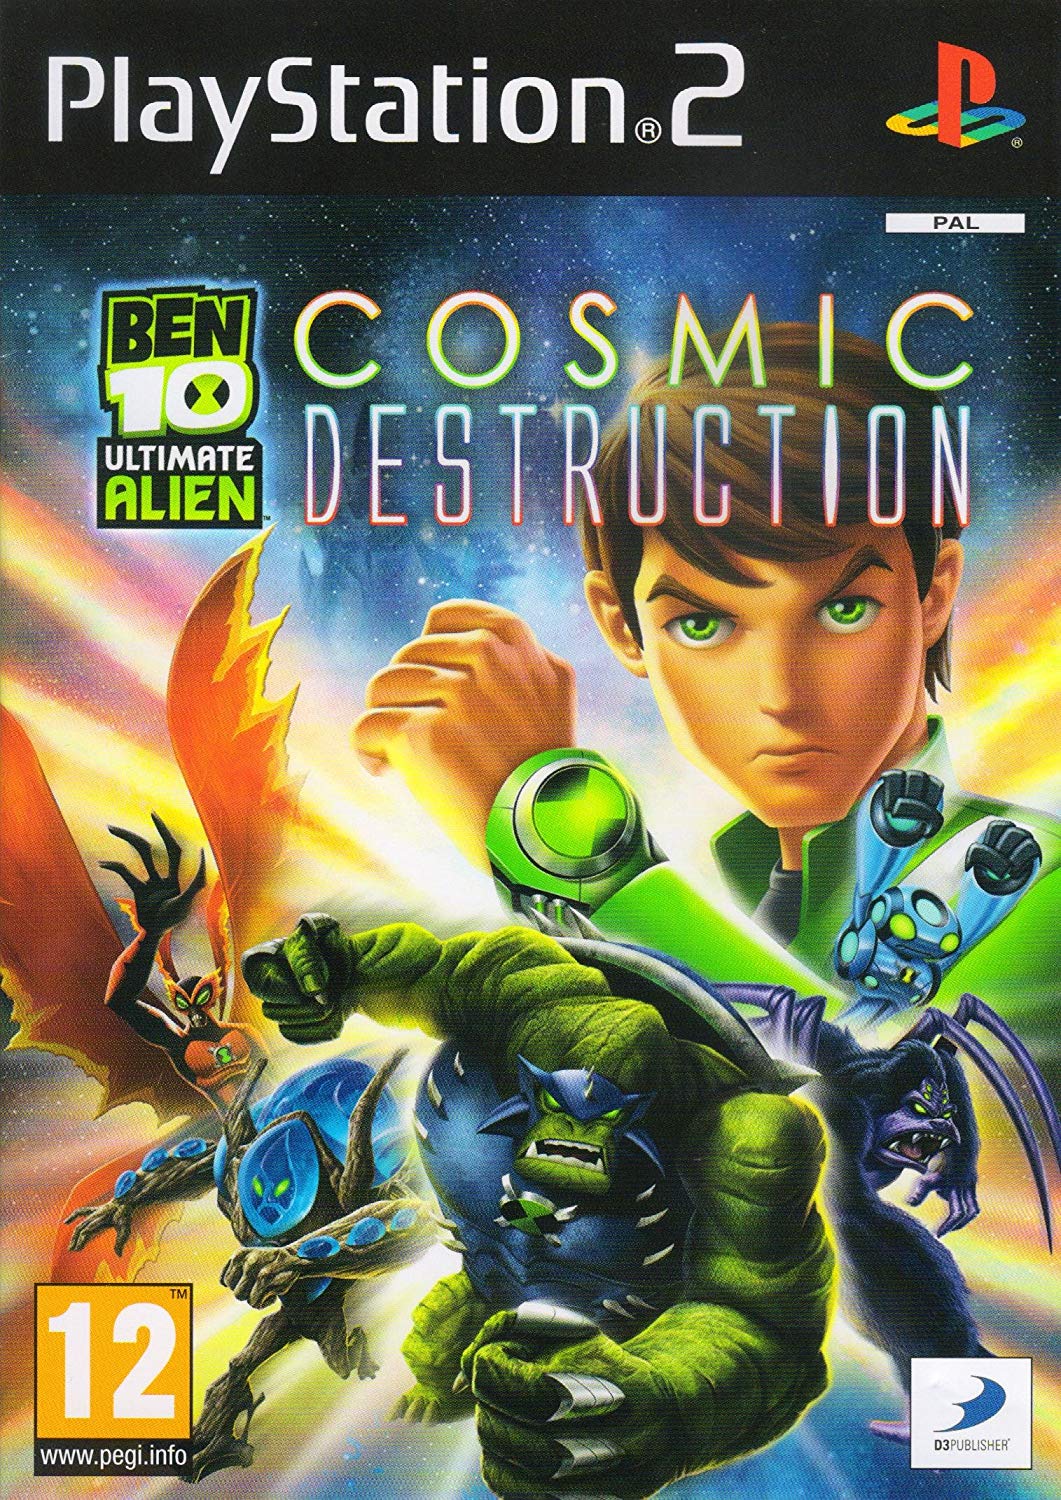 The coverart image of Ben 10 Ultimate Alien: Cosmic Destruction